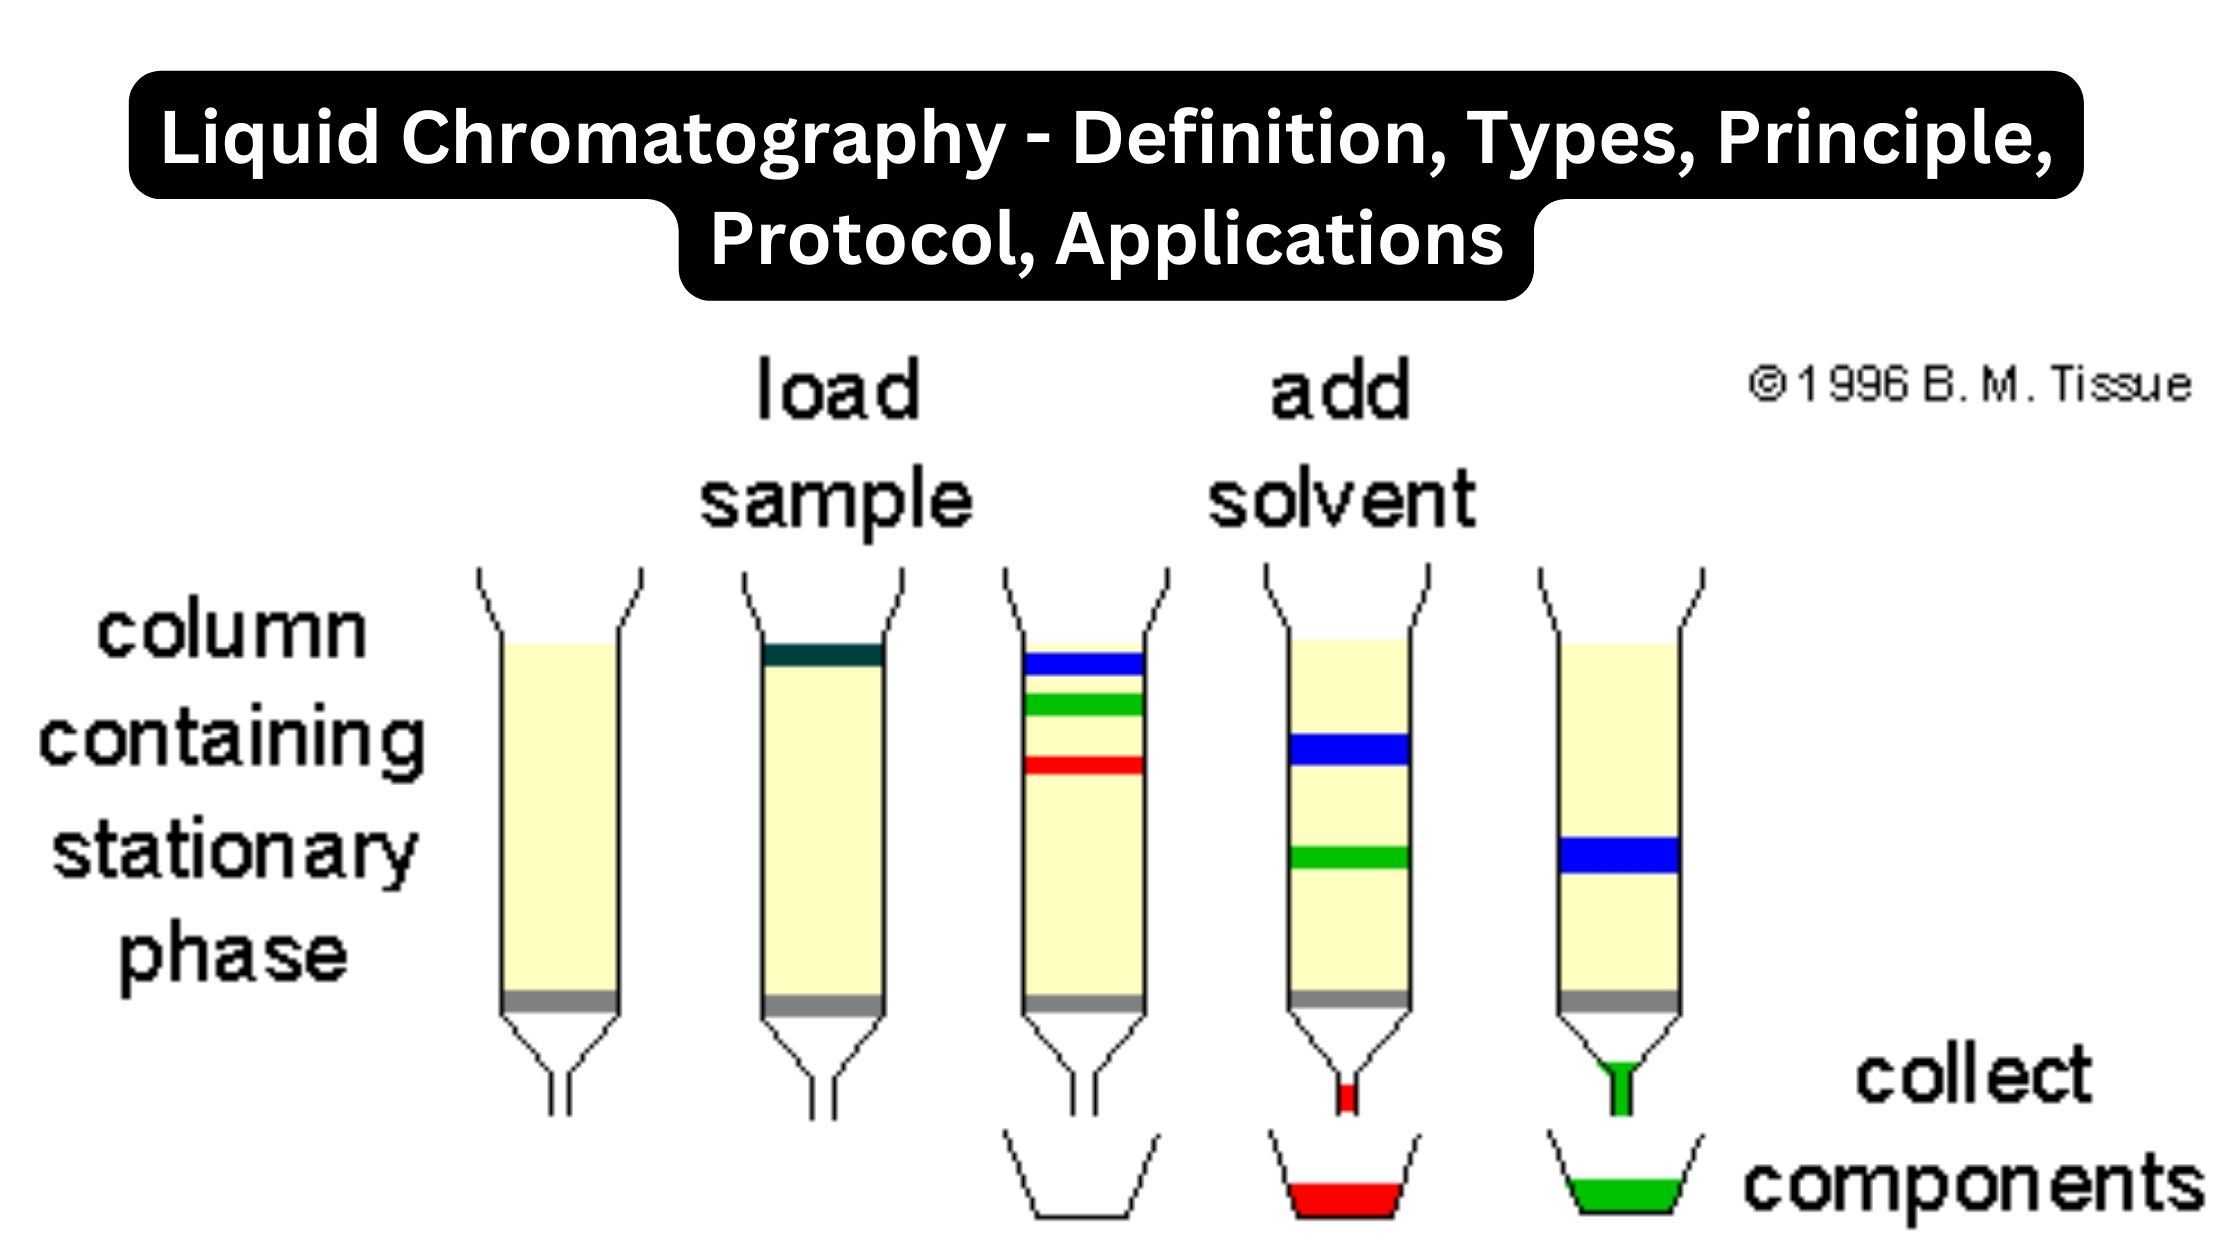 Liquid Chromatography - Definition, Types, Principle, Protocol, Applications